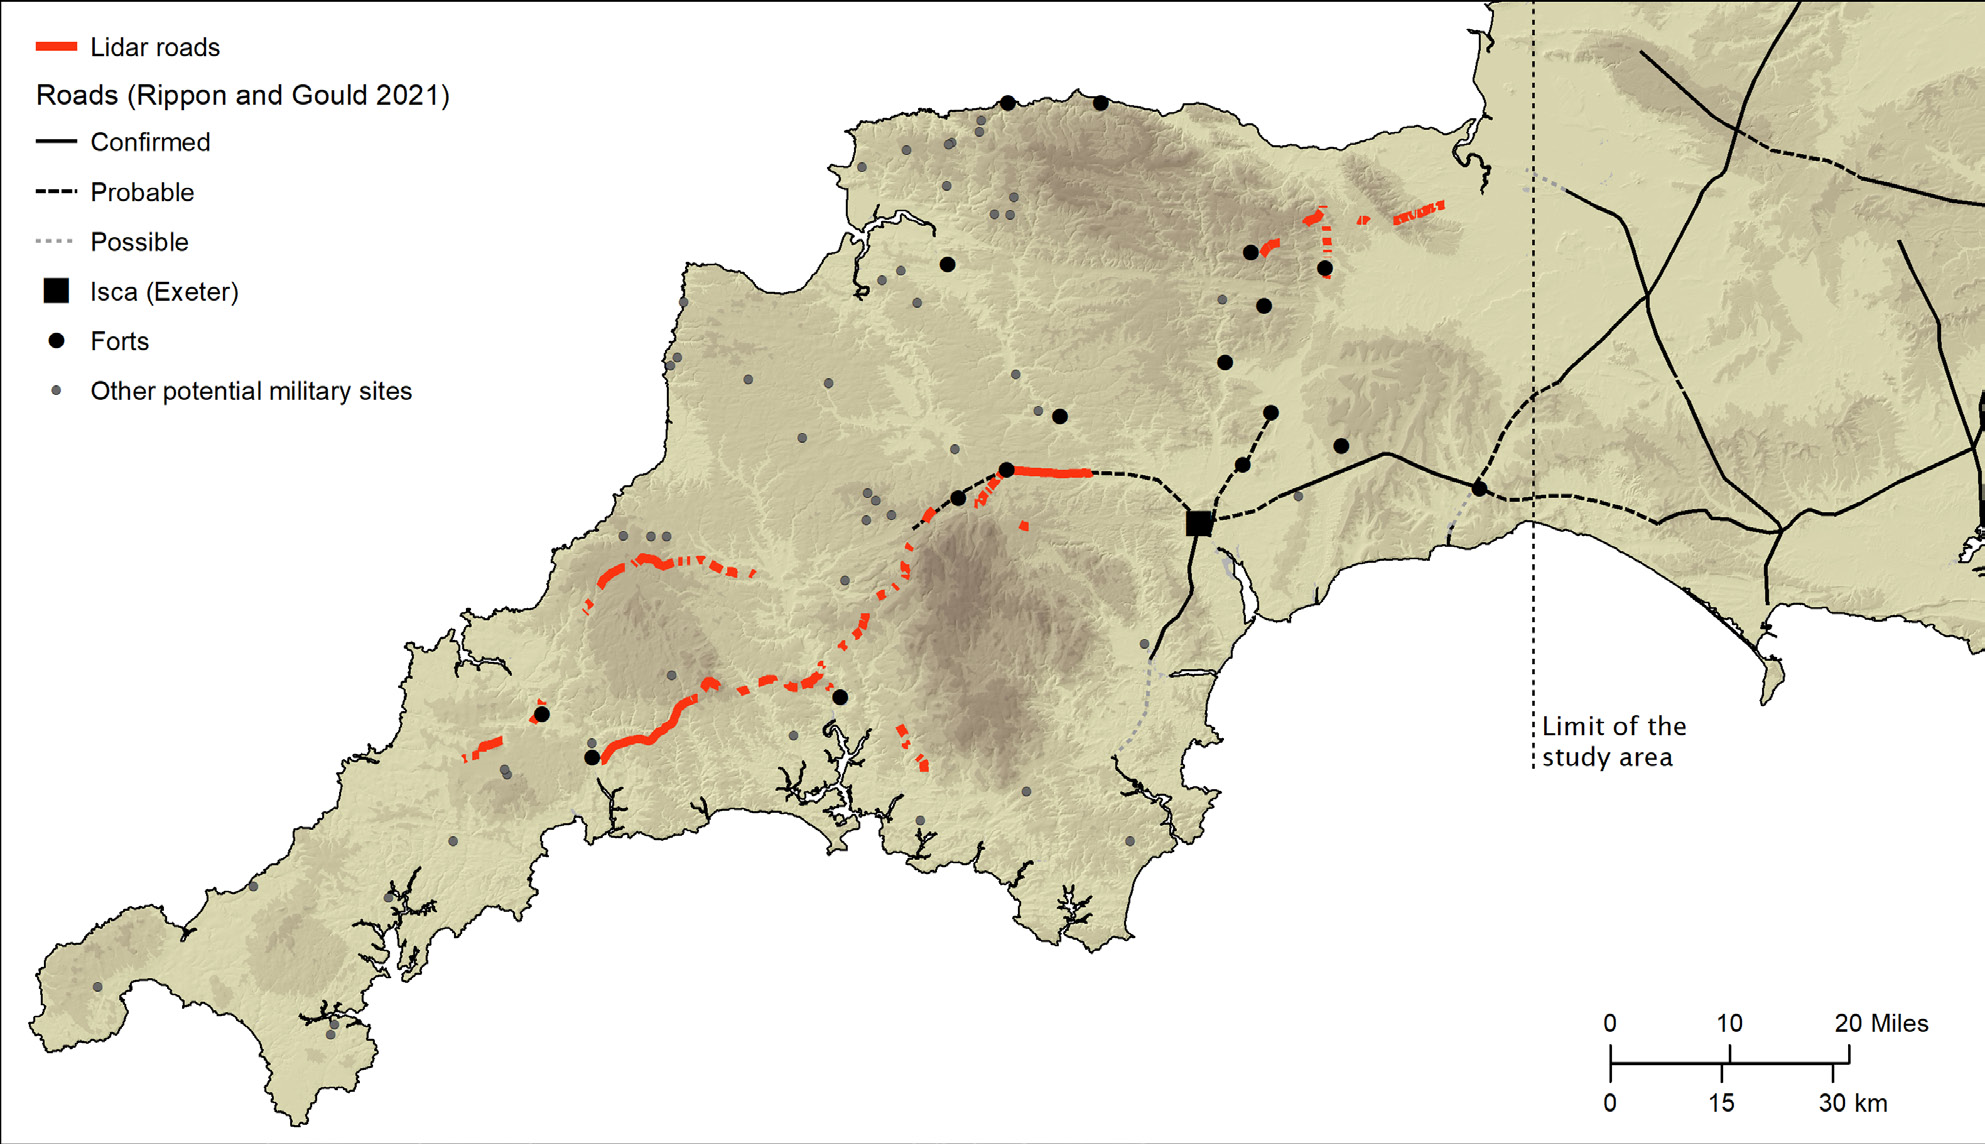 Map showing Roman roads